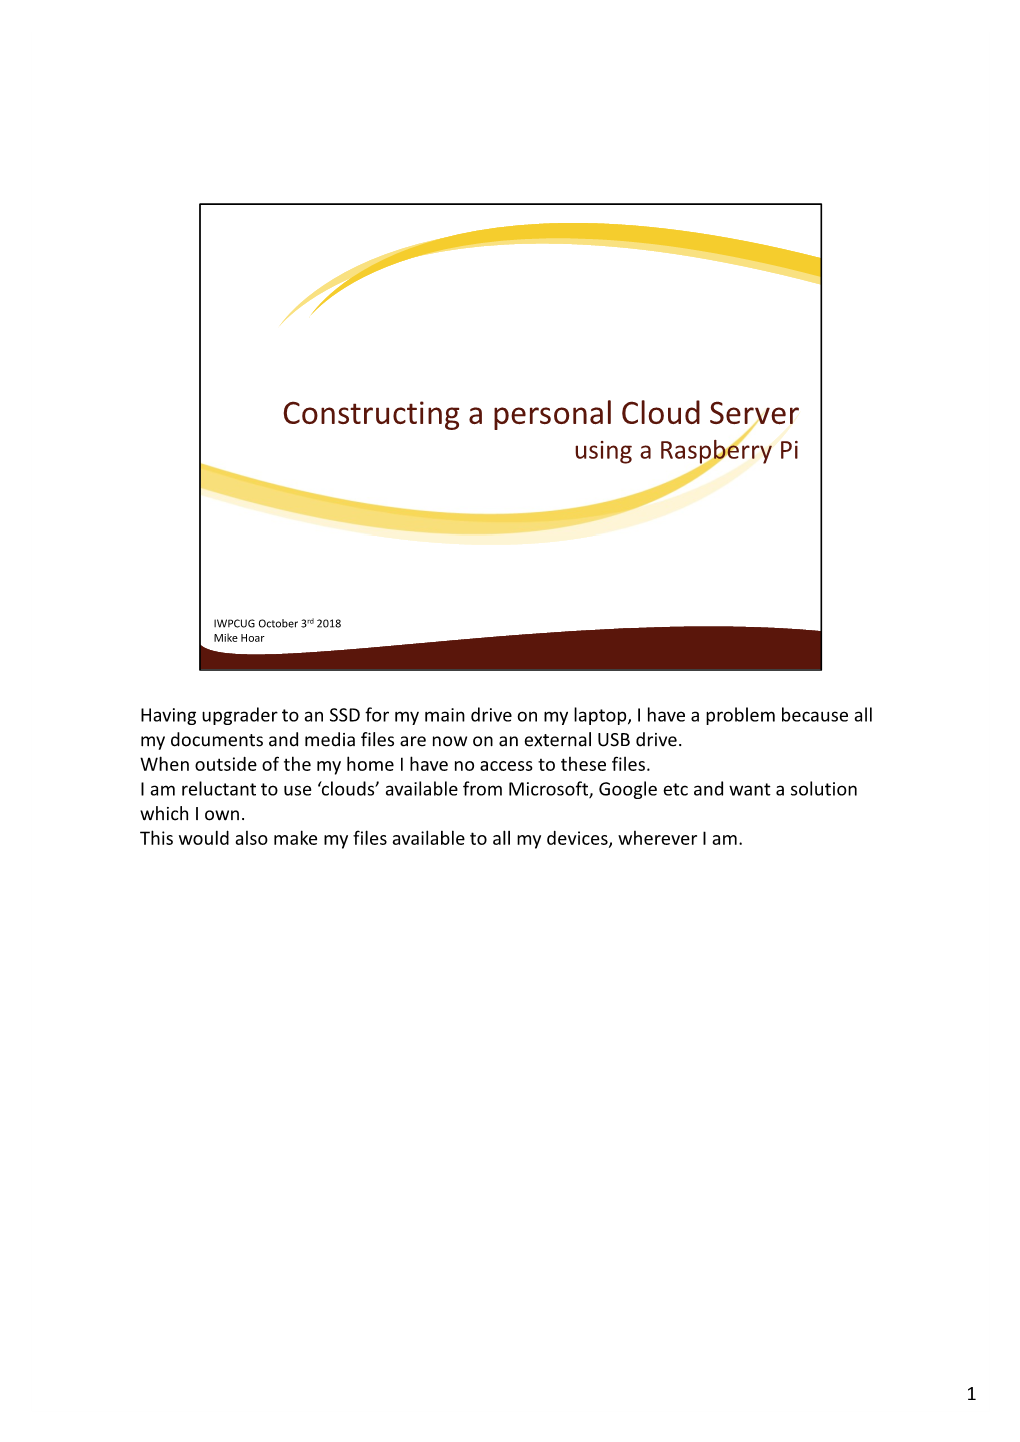 Constructing a Personal Cloud Server Using a Raspberry Pi